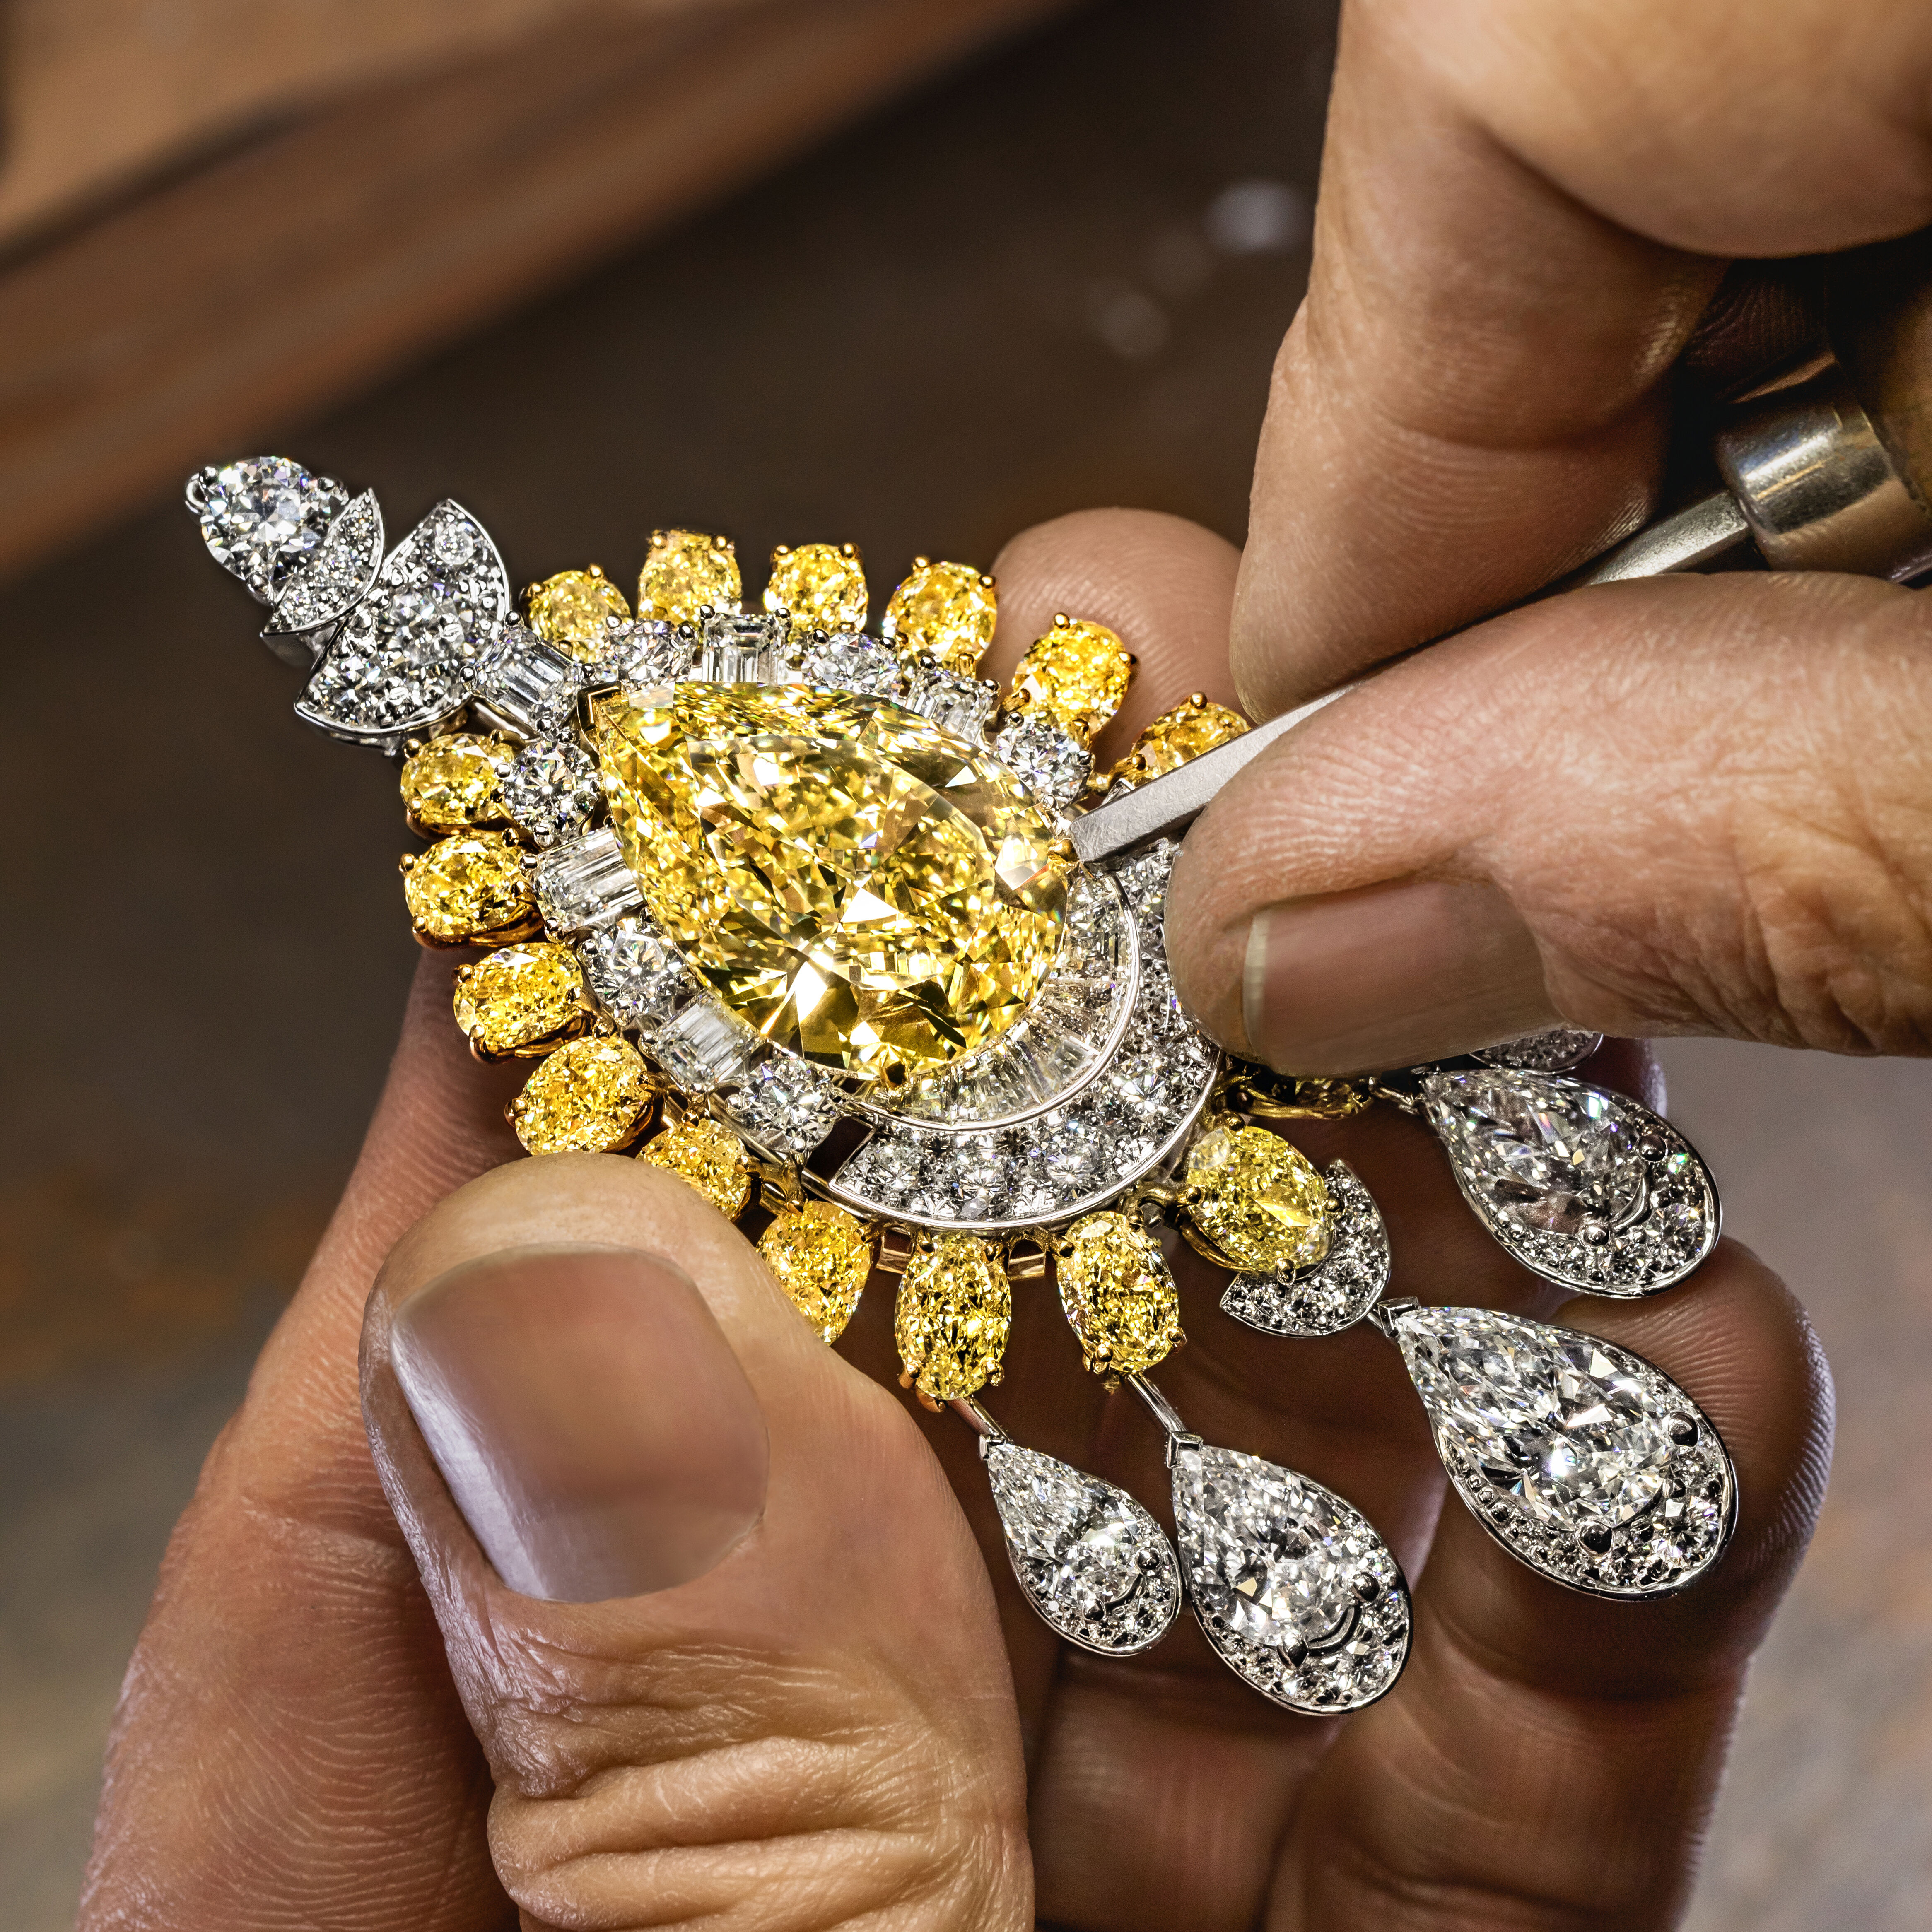 74ct. Yellow Diamond to Lead Sotheby's Hong Kong